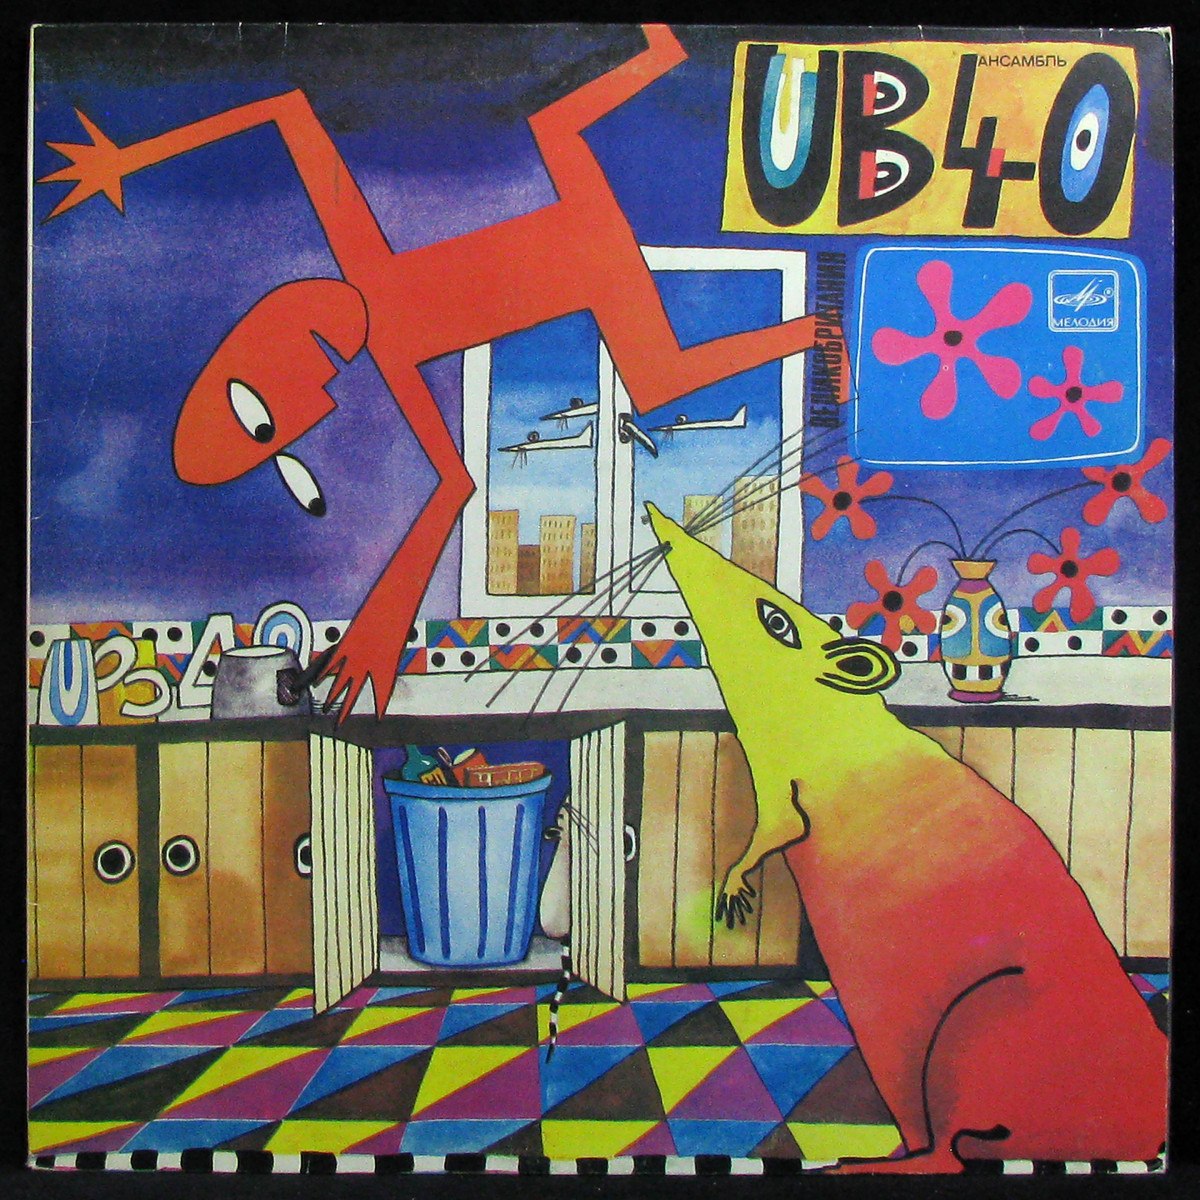 LP UB40 — Rat In The Kitchen фото